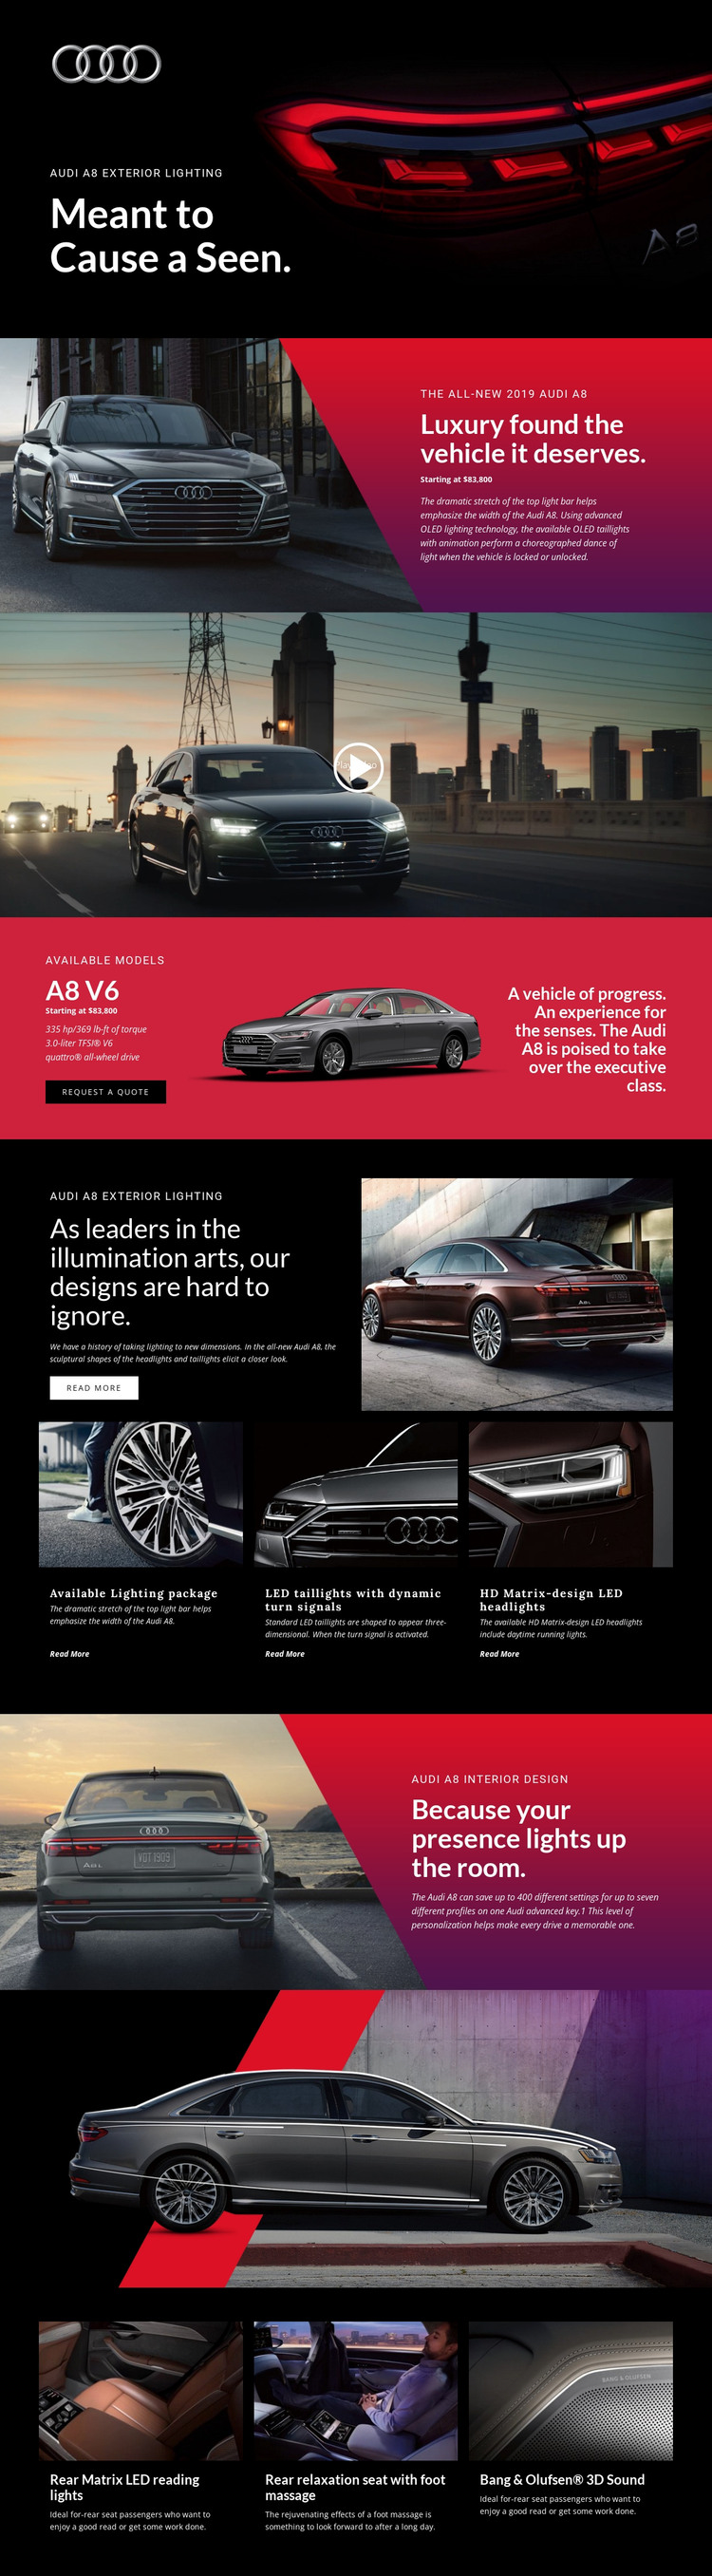 Audi luxury cars Web Design